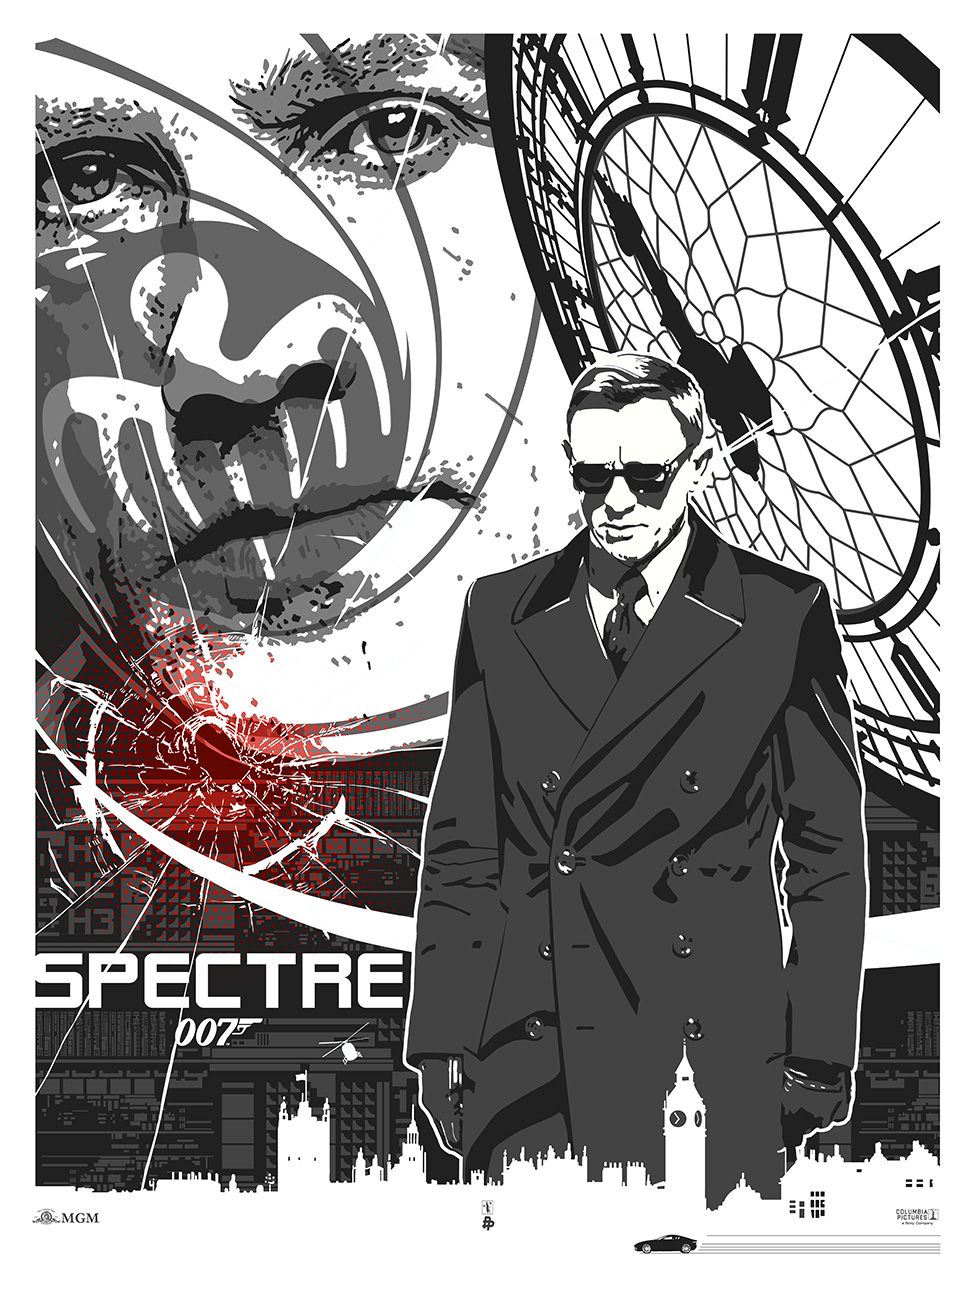 SPECTRE - 007 James Bond Daniel Craig Artwork FanArt Poster Posse Image 6 The Darkinker - Go with the Blog